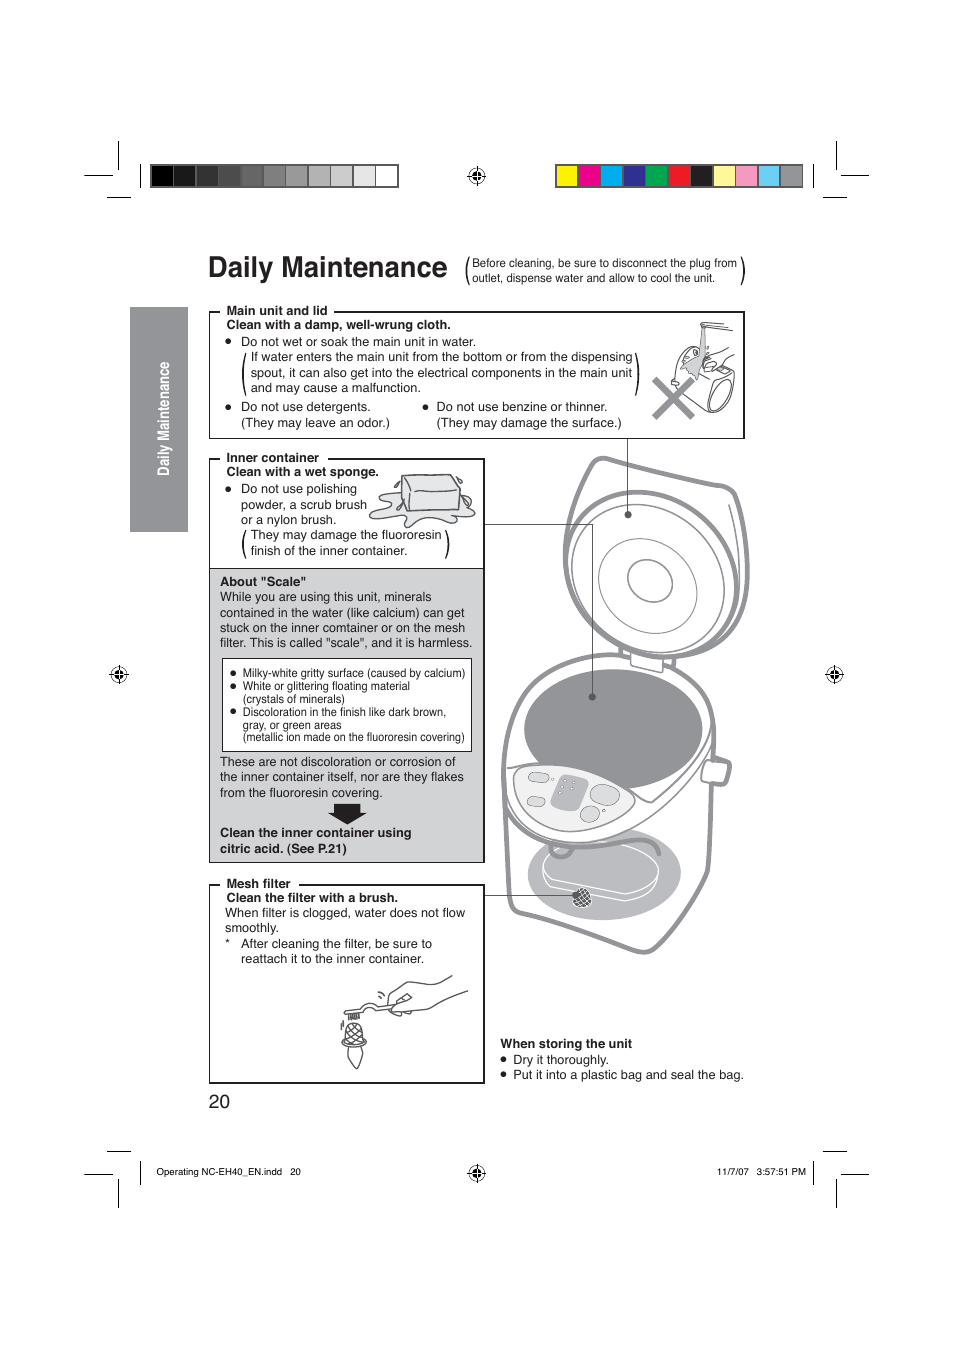 Daily maintenance | Panasonic NC-EH40P Manuel d'utilisation | Page 20 / 52